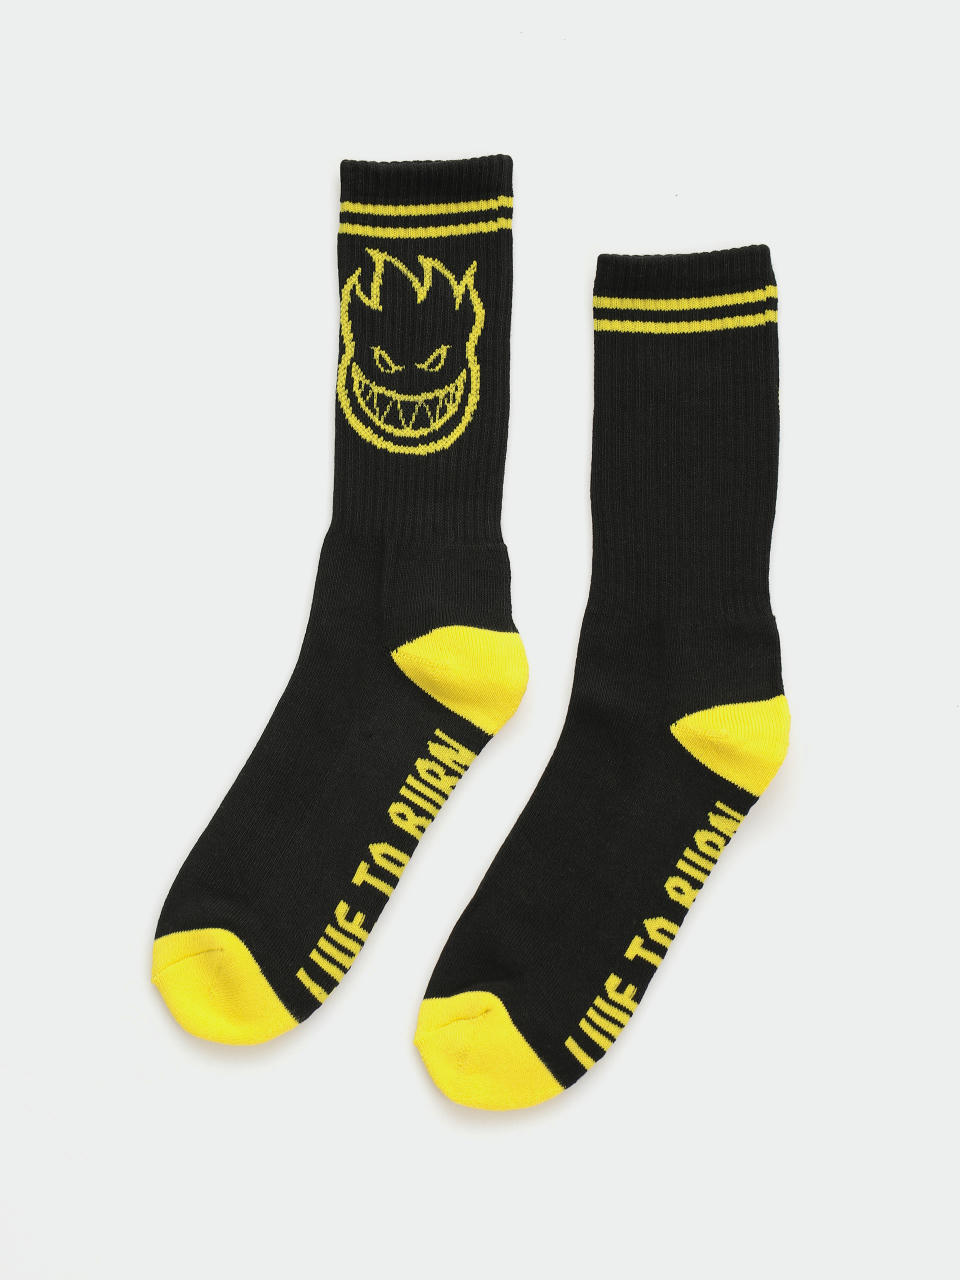 Spitfire Bighead Socken (black/yellow)